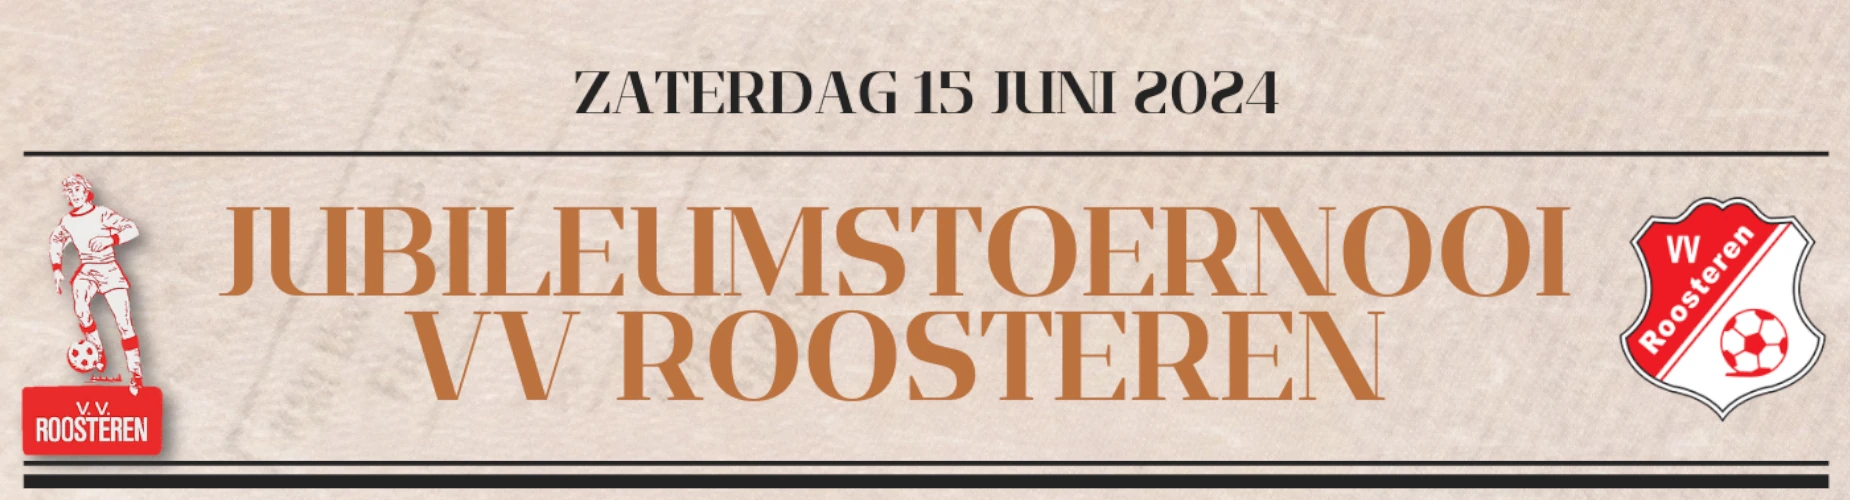 Banner - Jubileumtoernooi VV Roosteren - VV Roosteren - Roosteren